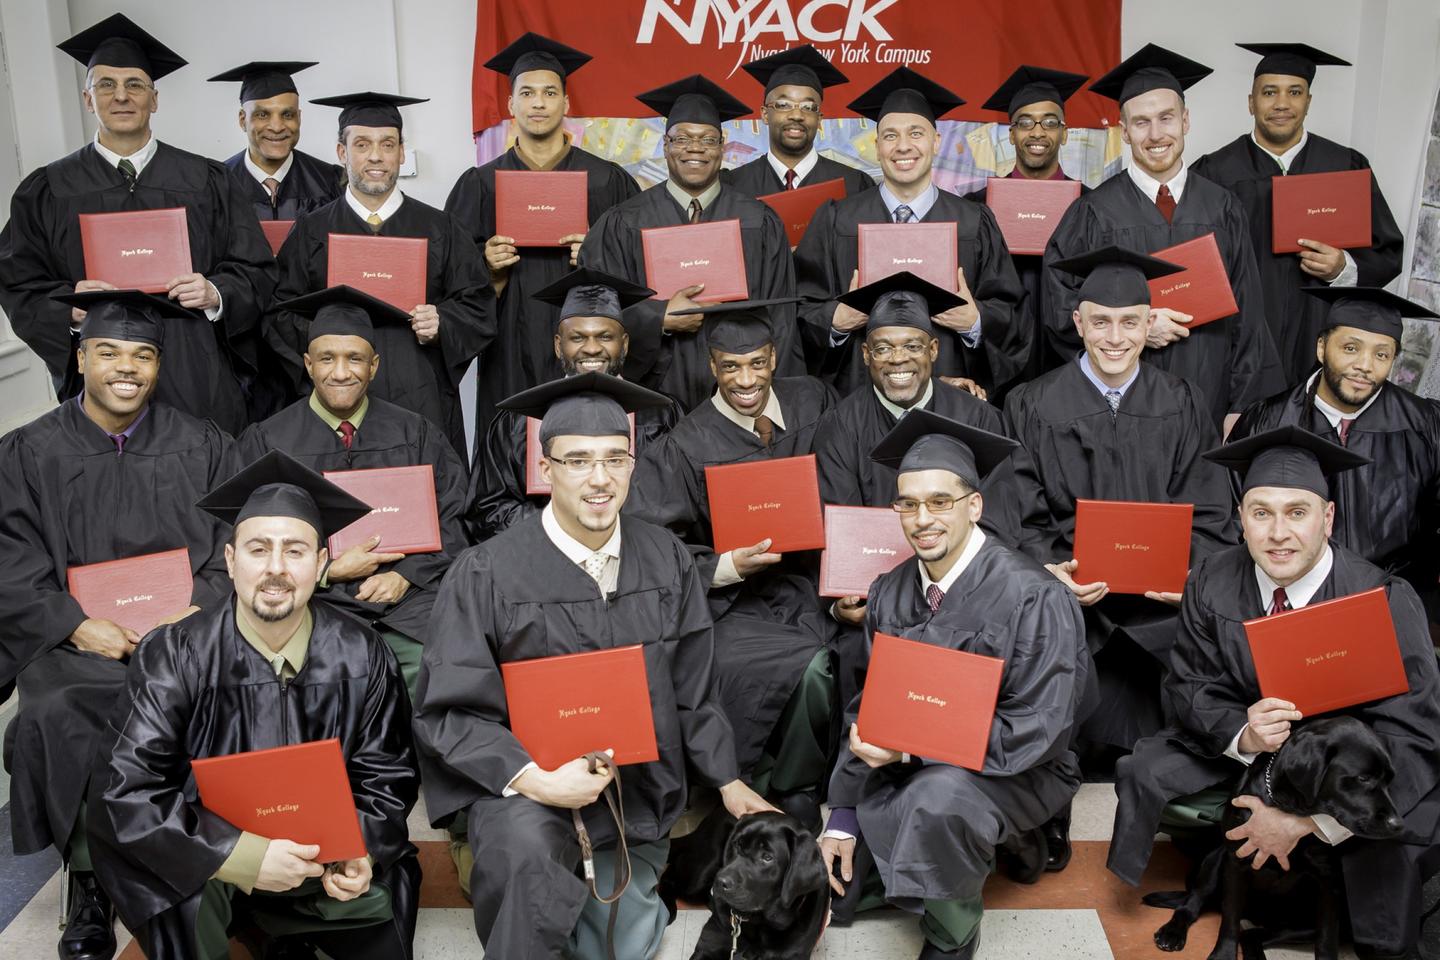 Hudson Link graduates pose for a group photos with their diplomas